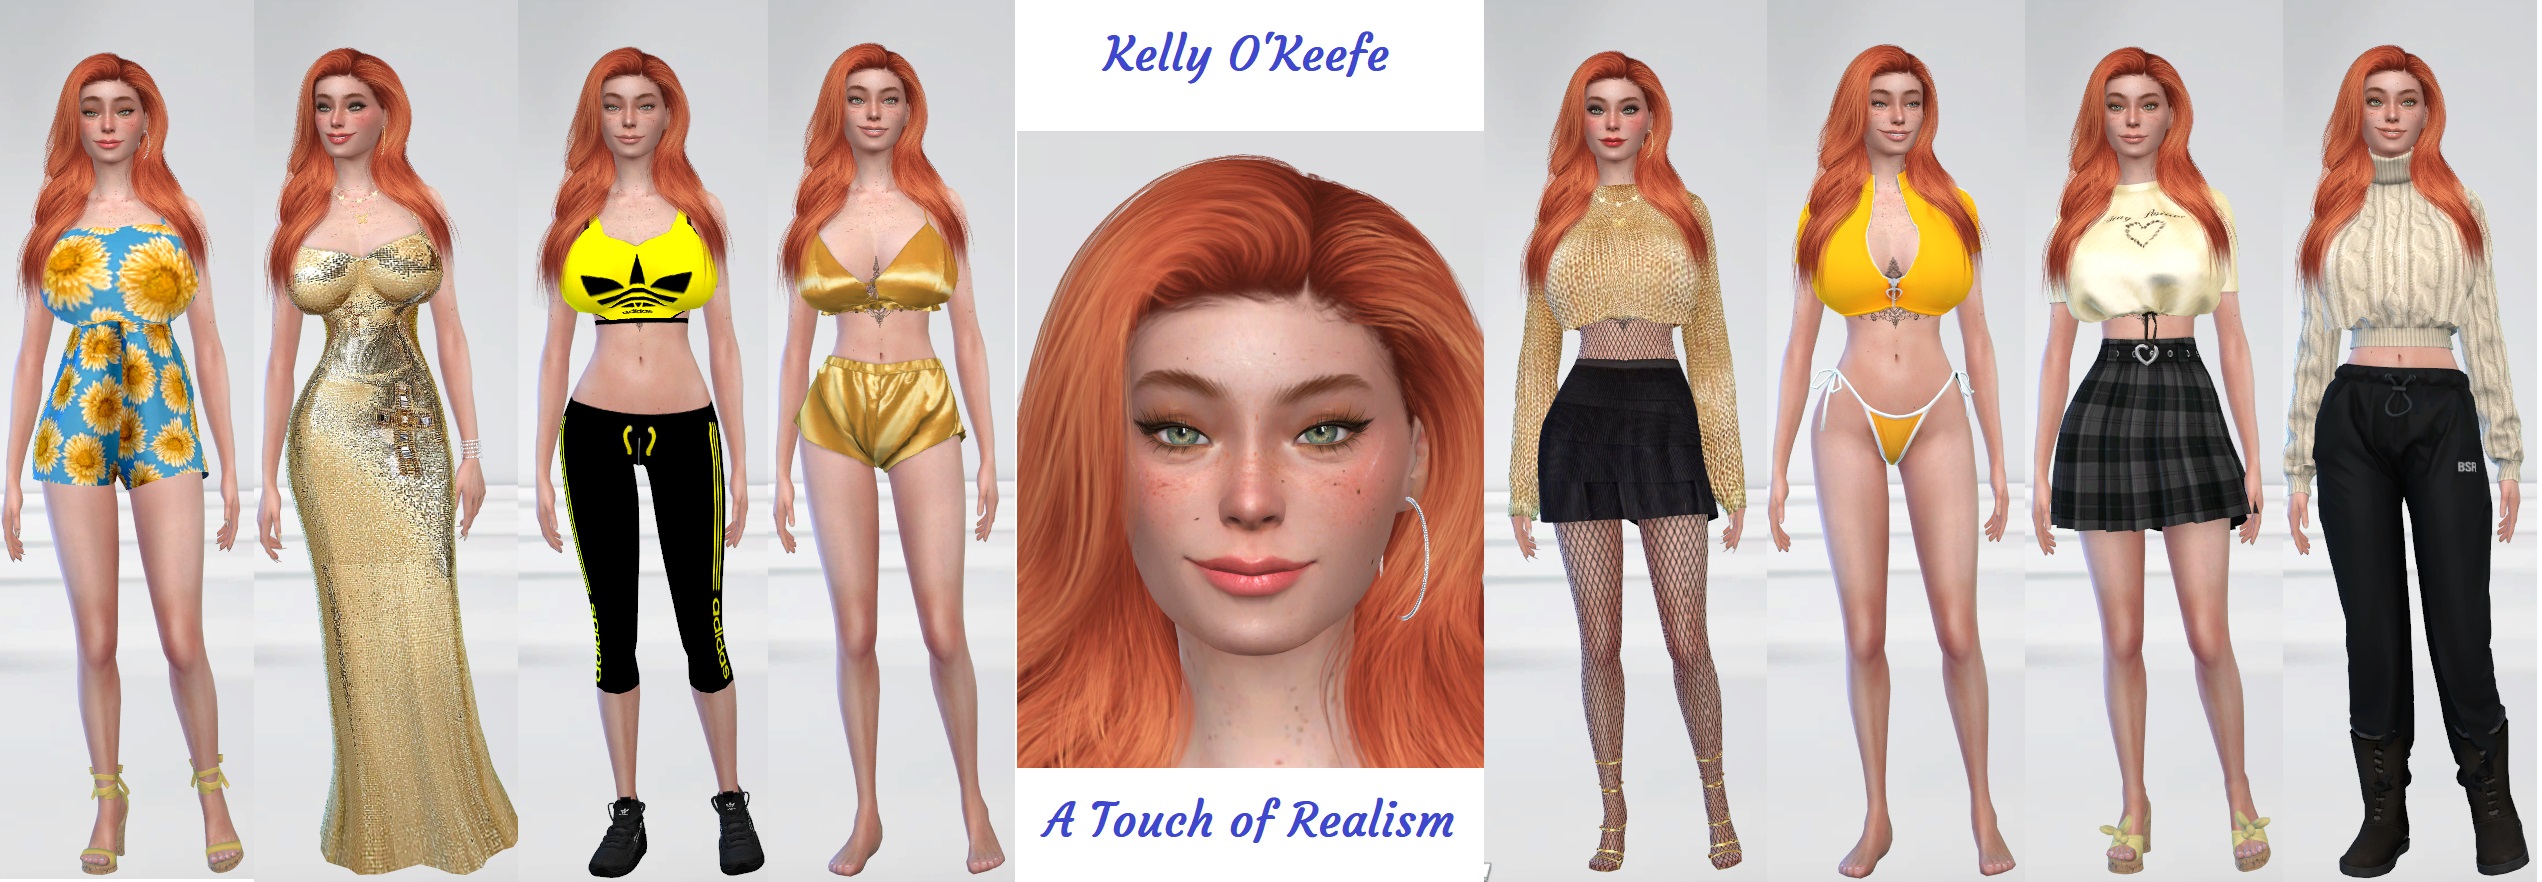 Original Sim Kelly O'Keefe